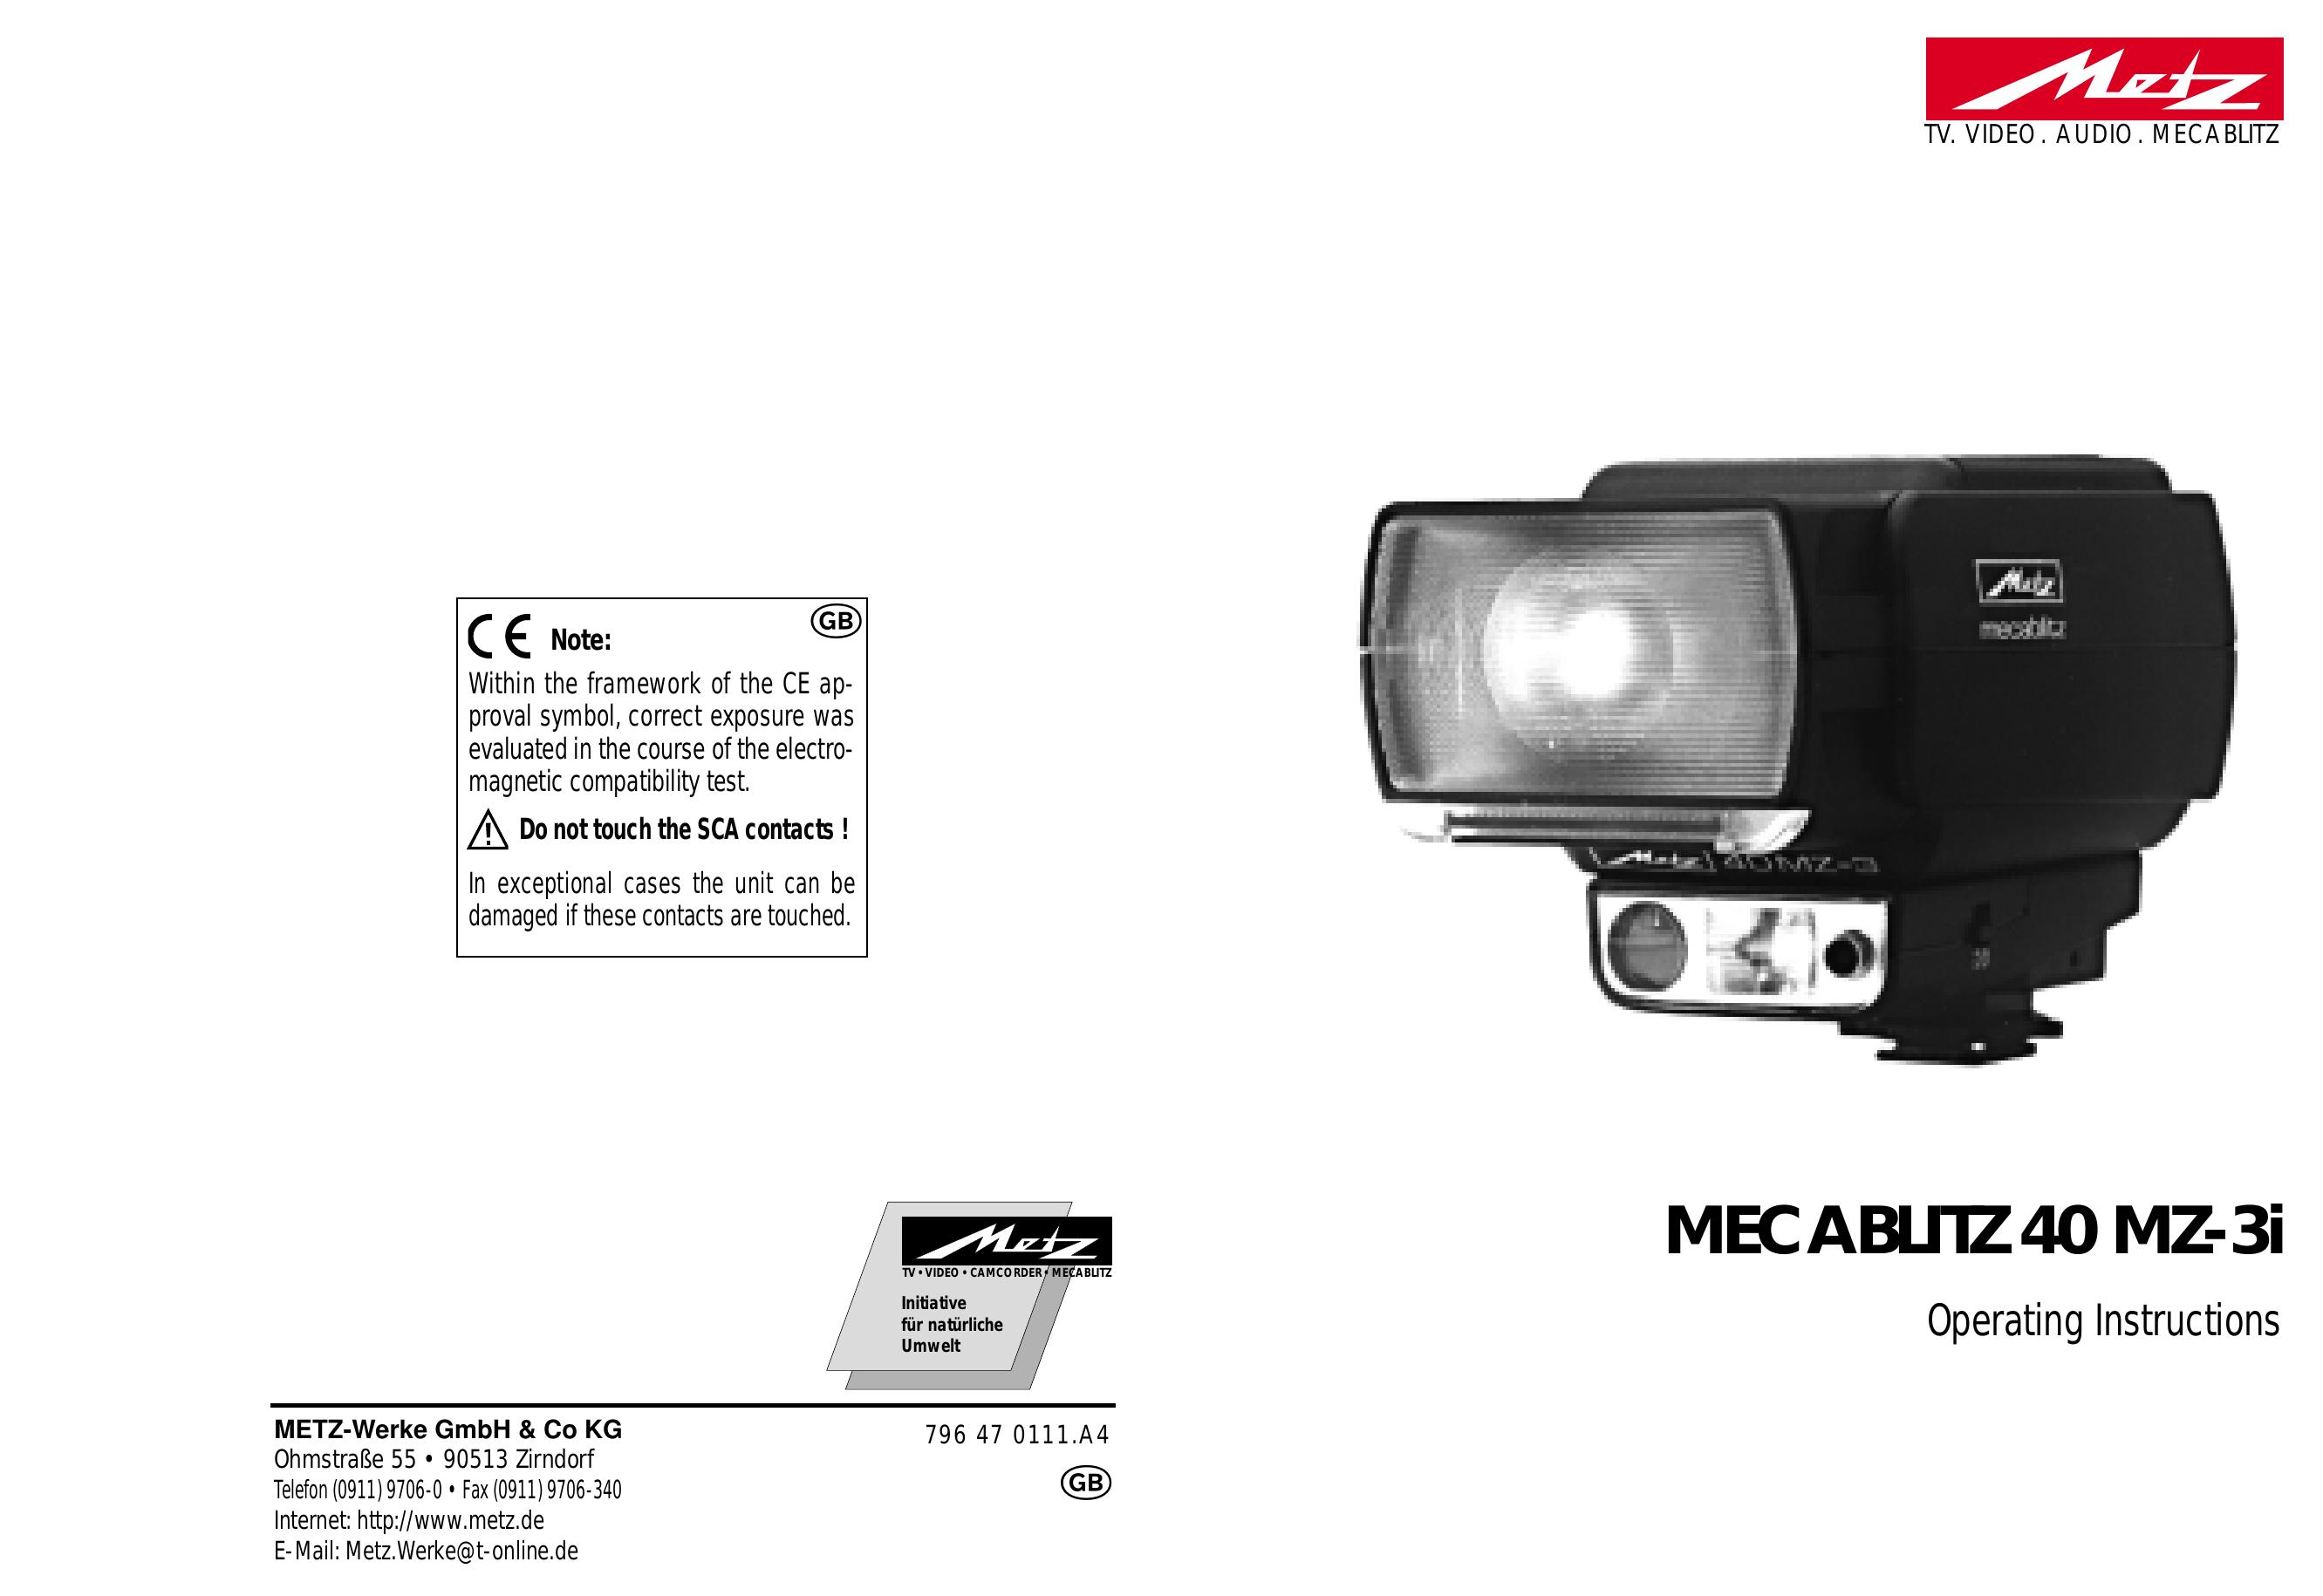 Pentax 40 MZ-3i Camera Flash User Manual